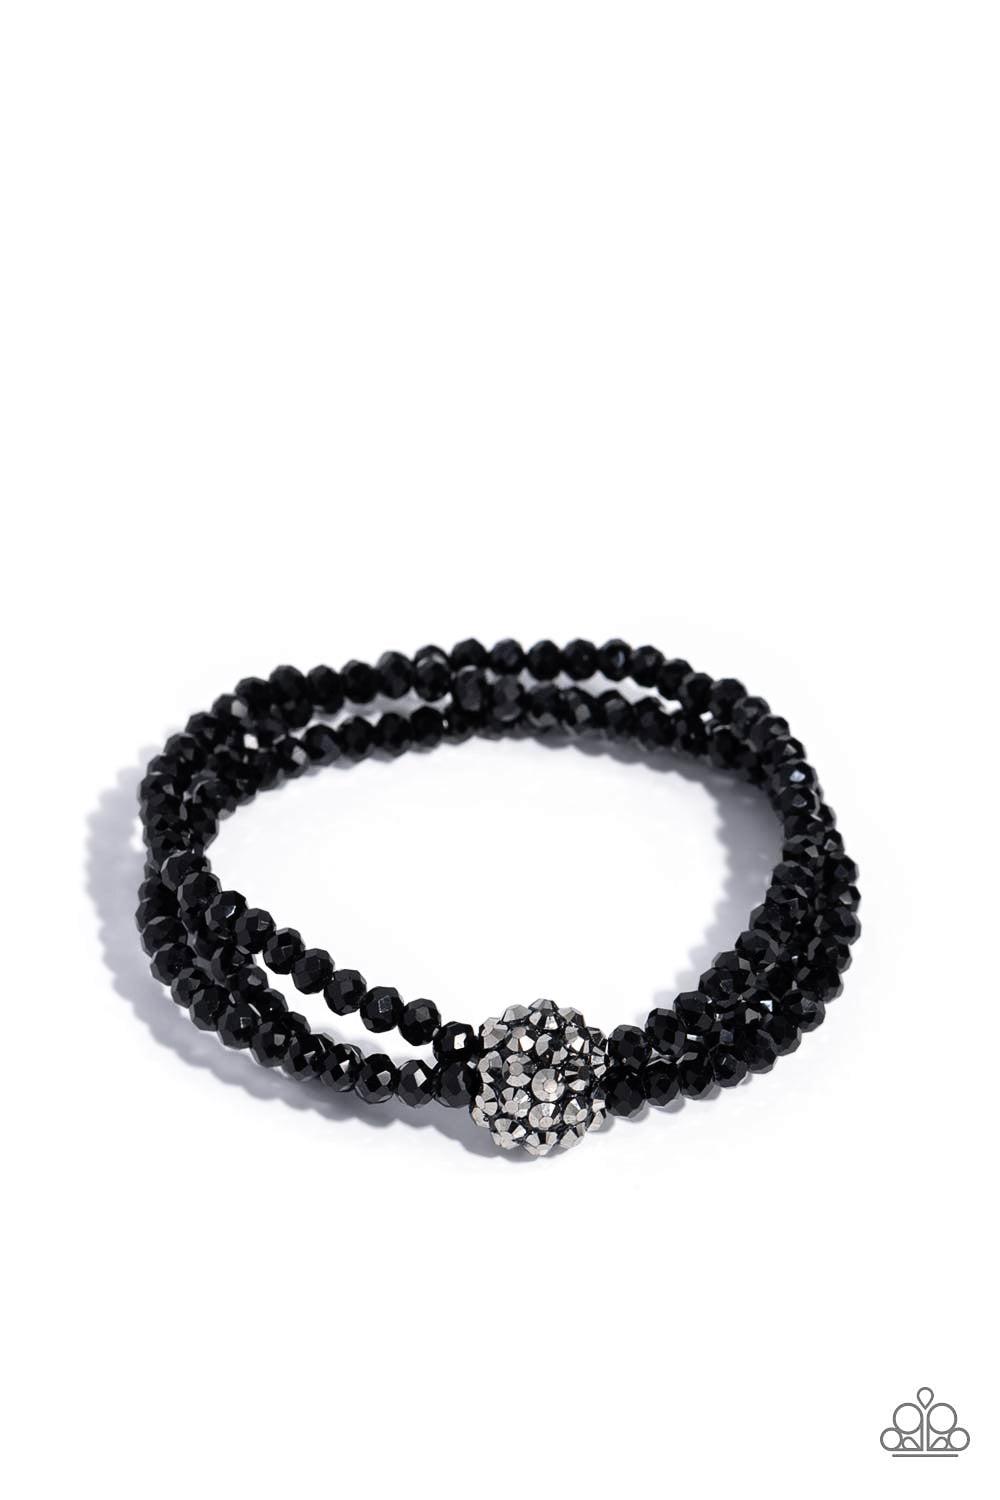 Twisted Theme Black Bracelet - Paparazzi Accessories- lightbox - CarasShop.com - $5 Jewelry by Cara Jewels